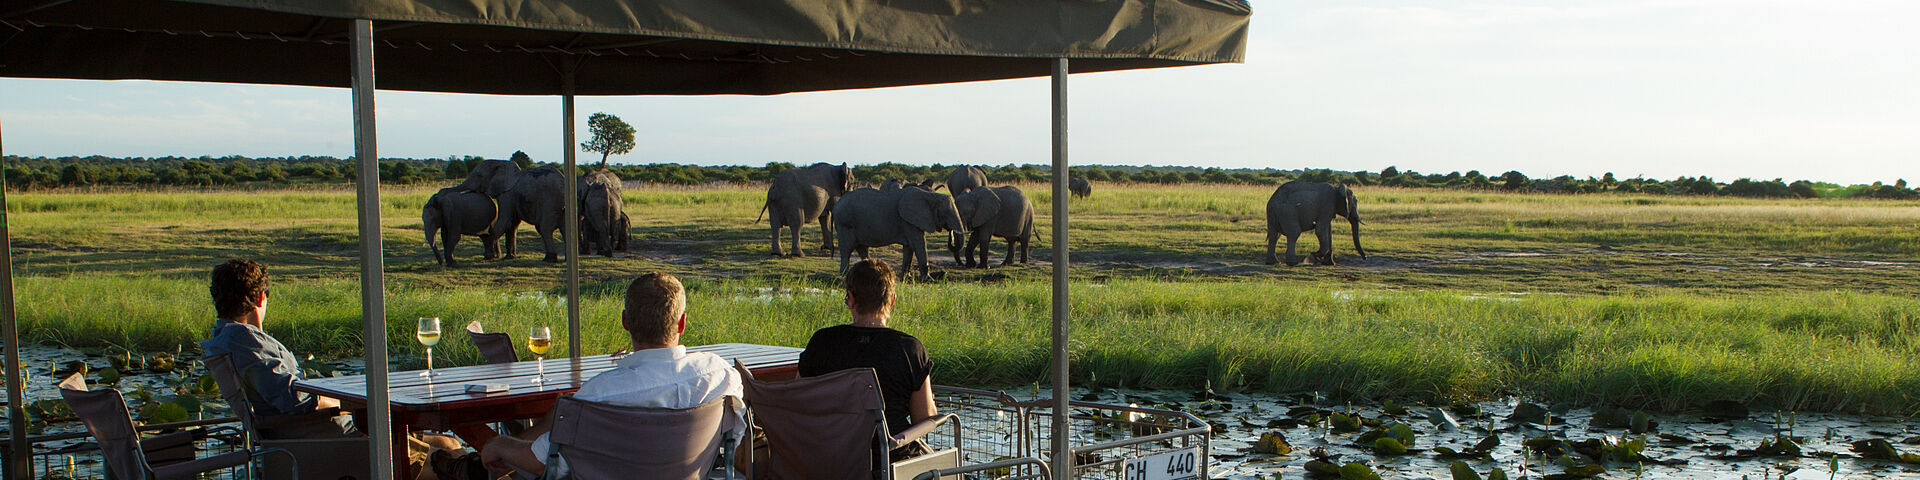 Chobe Game Lodge River Safari Elephant- banner